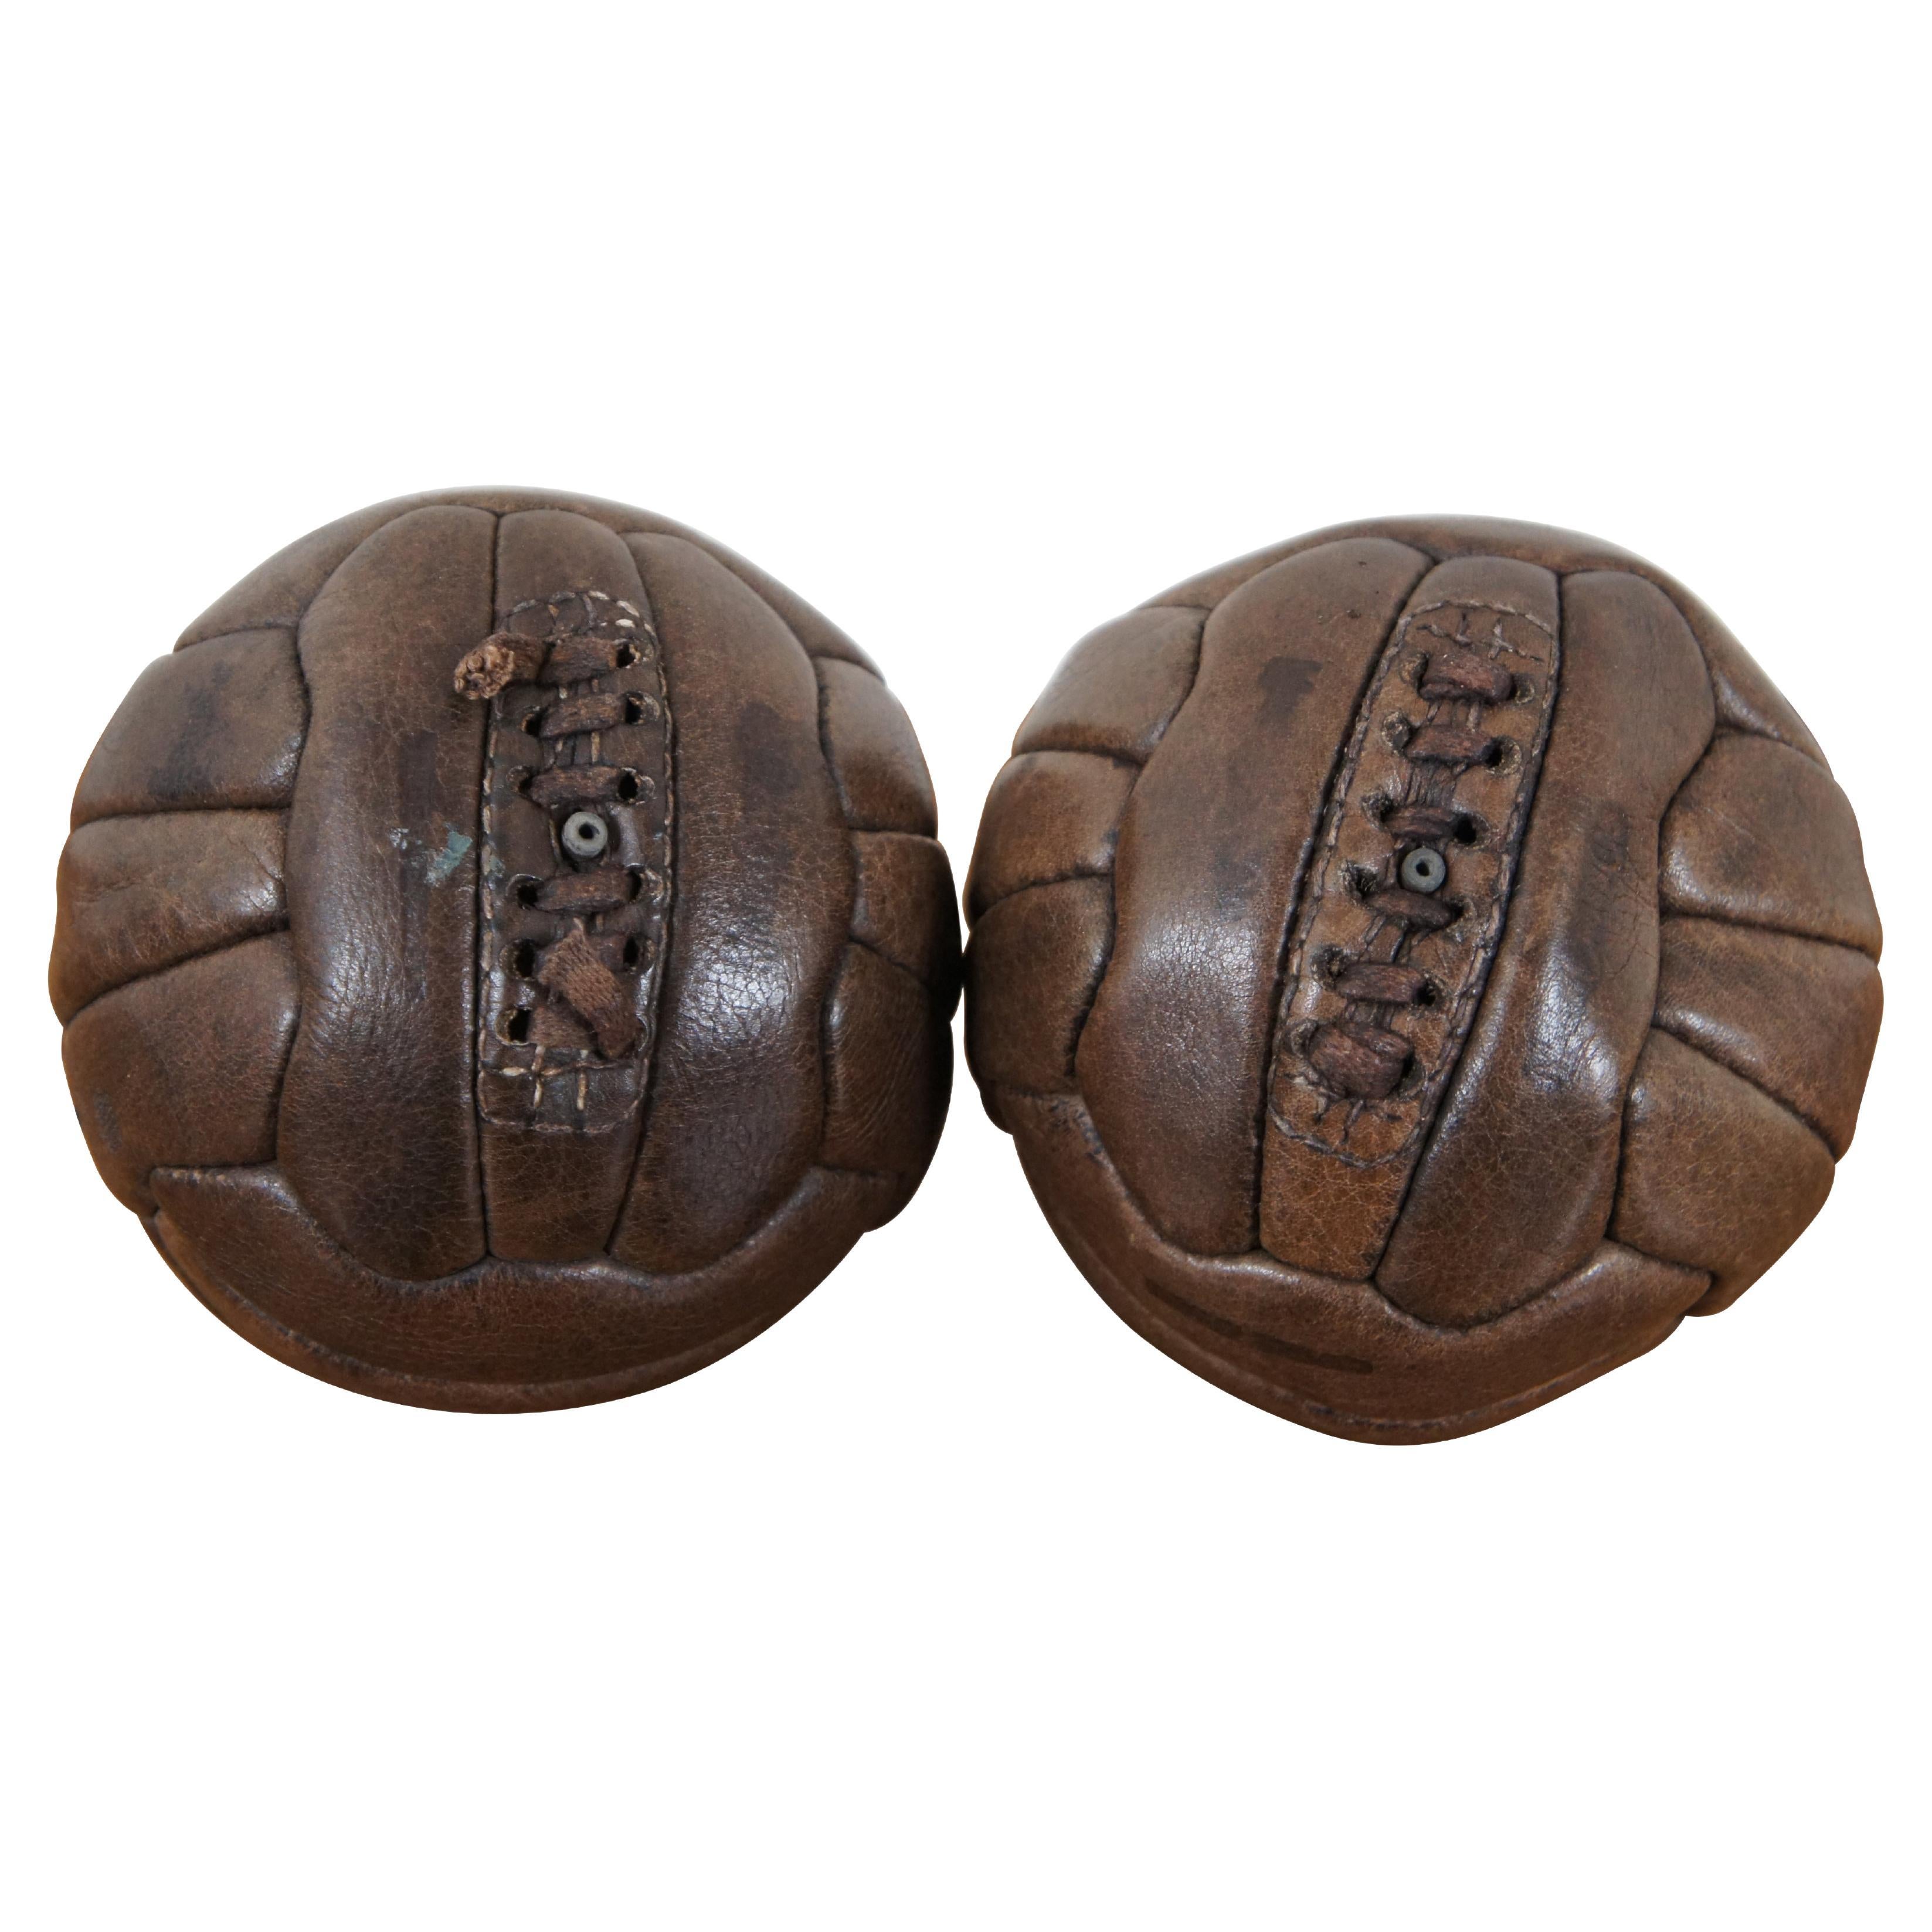 2 Antique English Mark Cross Leather Footballs Futbols Soccer Balls 6" For Sale